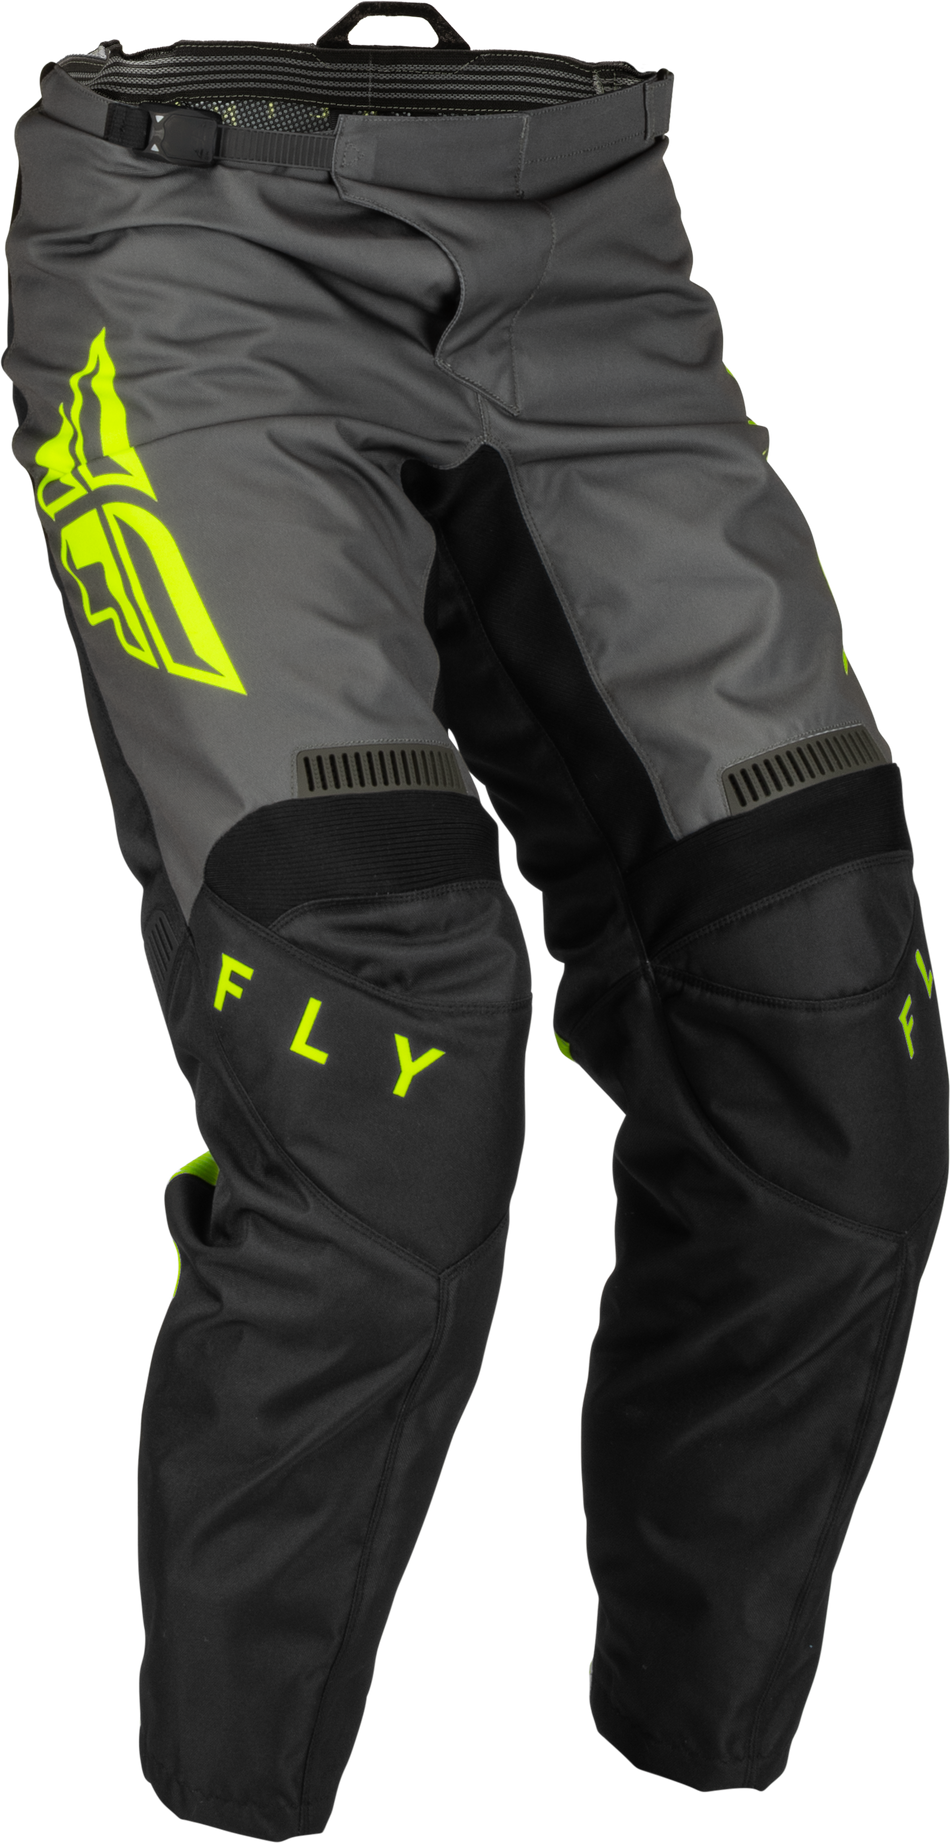 FLY RACING F-16 Pants Black/Grey/Hi-Vis Sz 30 376-93030